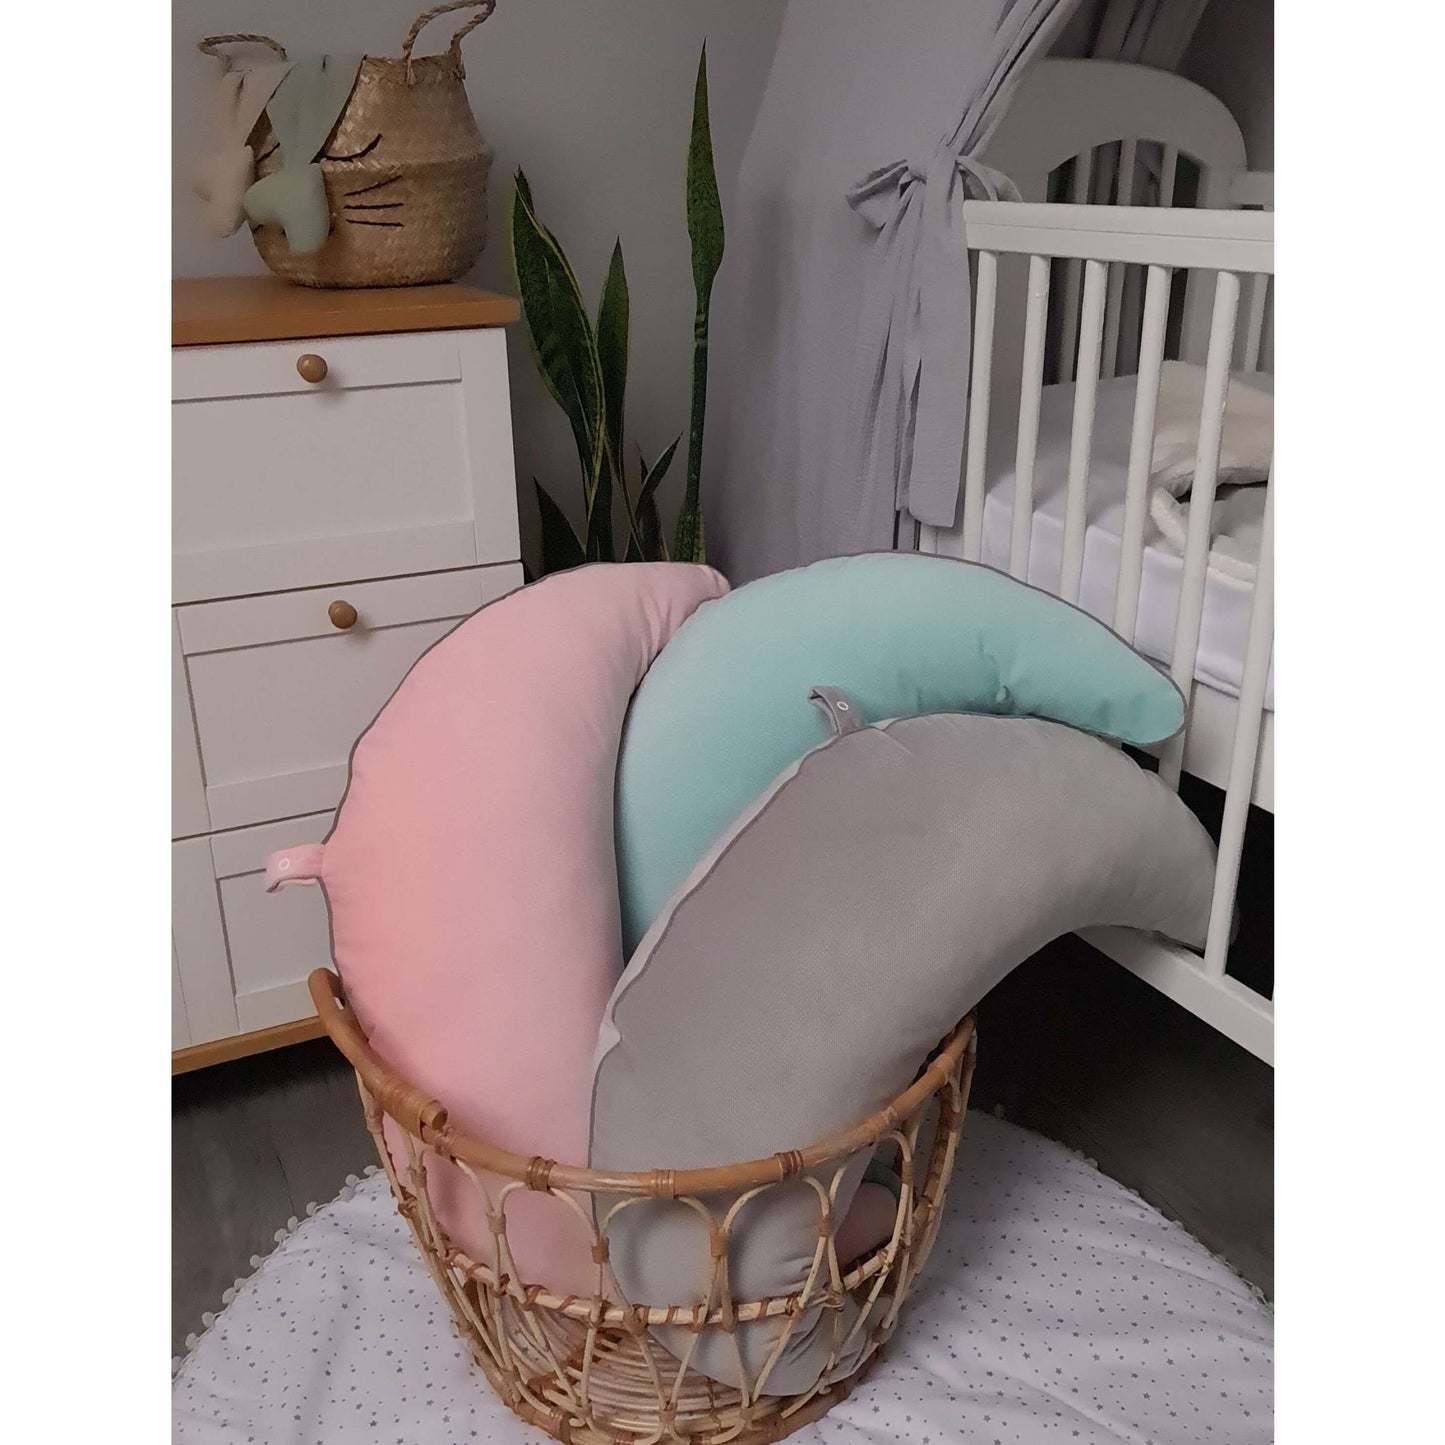 evcushy pregnancy and nursing pillows Ireland luxurious big pillows to support back pink grey aqua